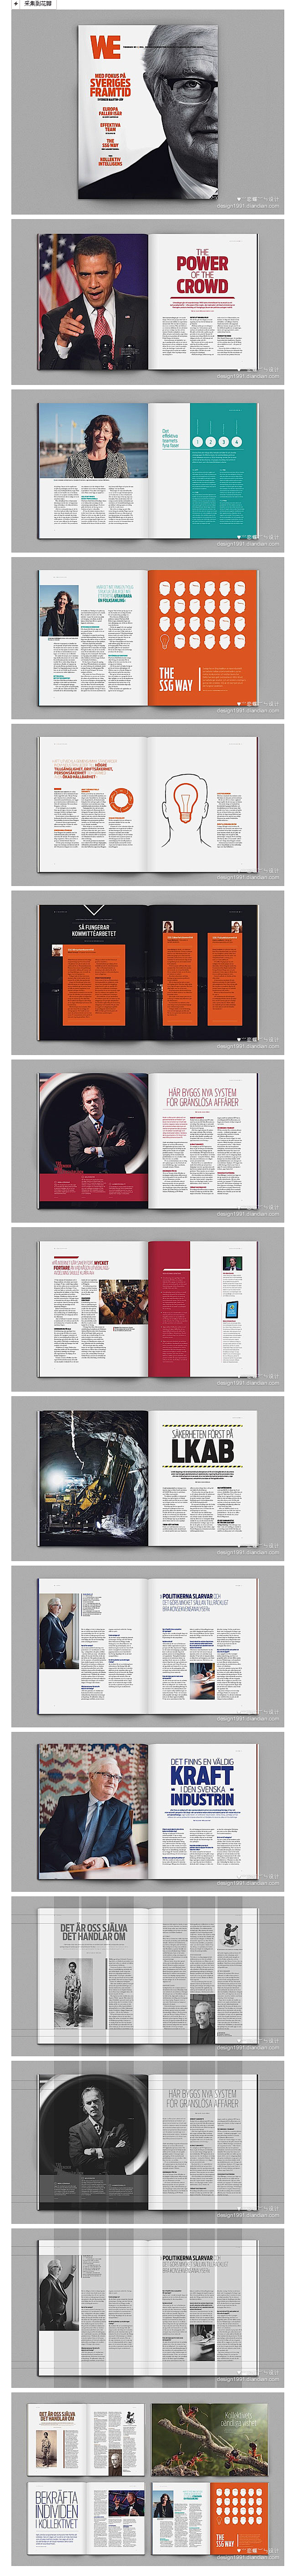 WE杂志封面与内页版式设计欣赏